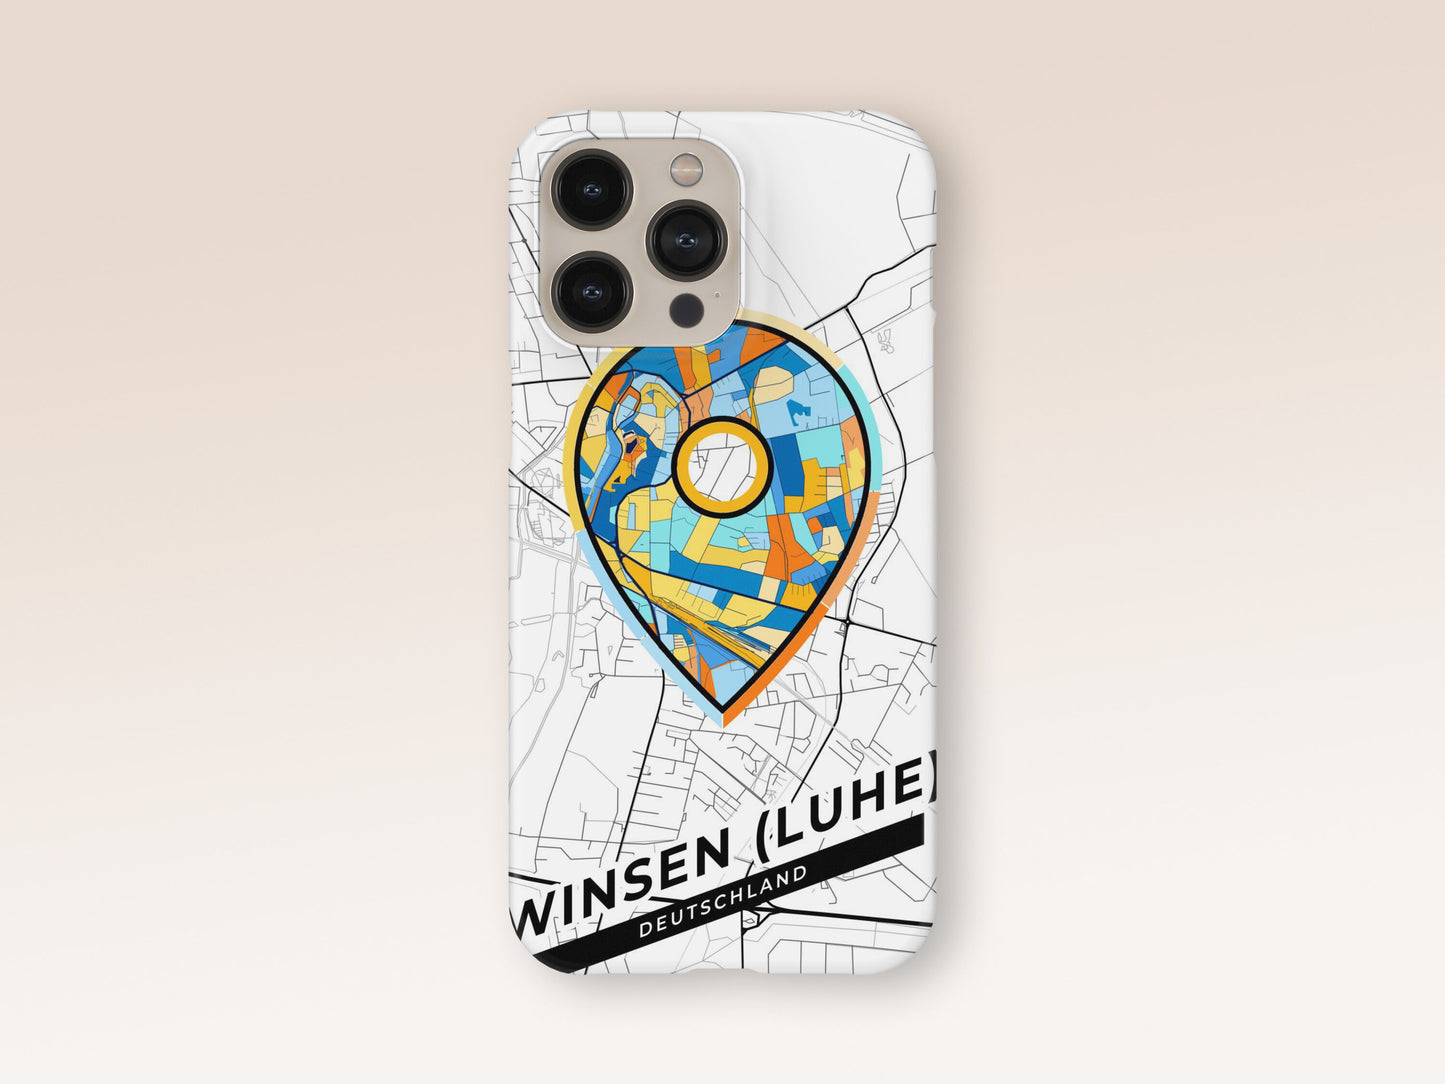 Winsen (Luhe) Deutschland slim phone case with colorful icon 1